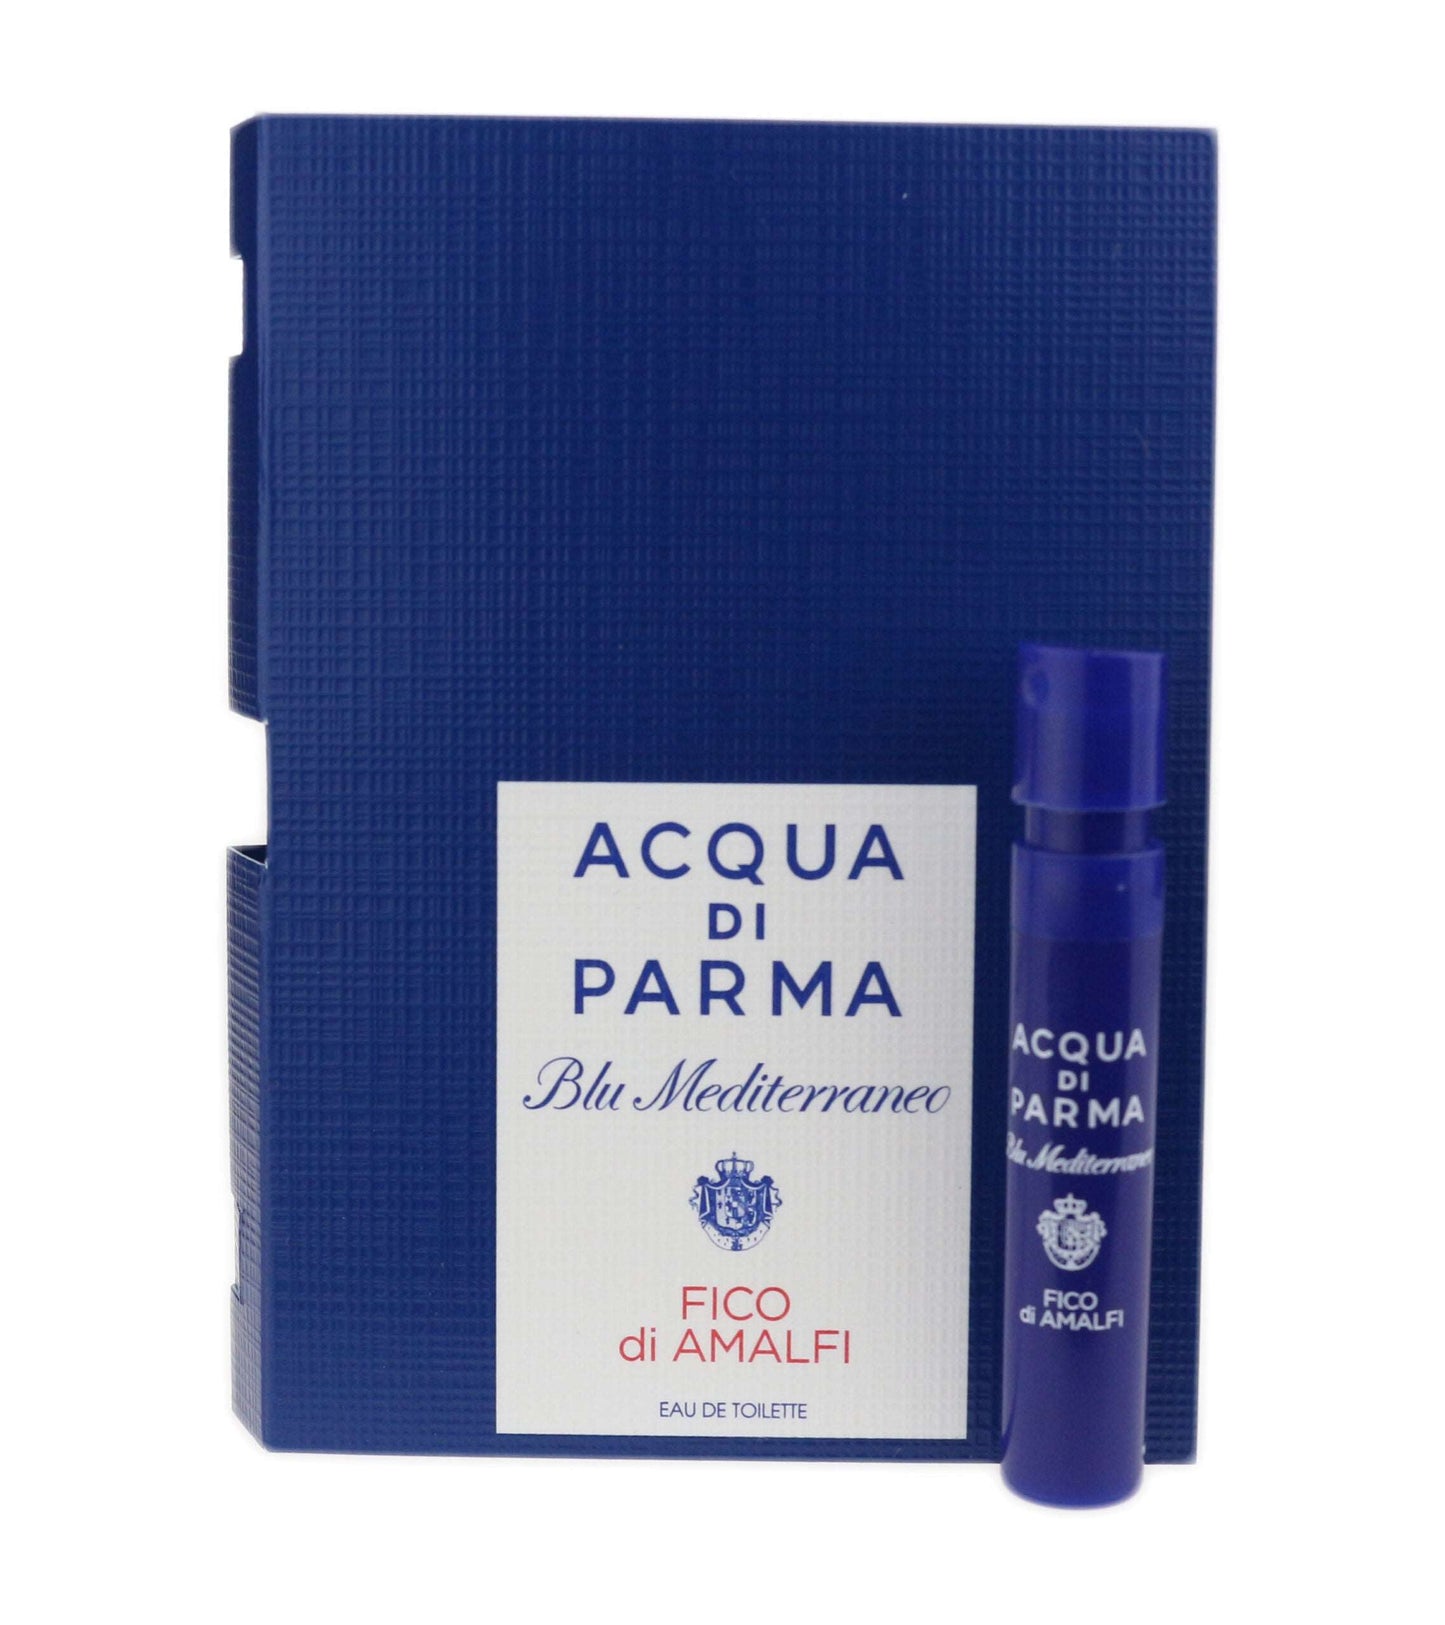 Acqua Di Parma Fico Di Amalfi 1.2ml-0.04 fl.oz. amostras oficiais de perfume